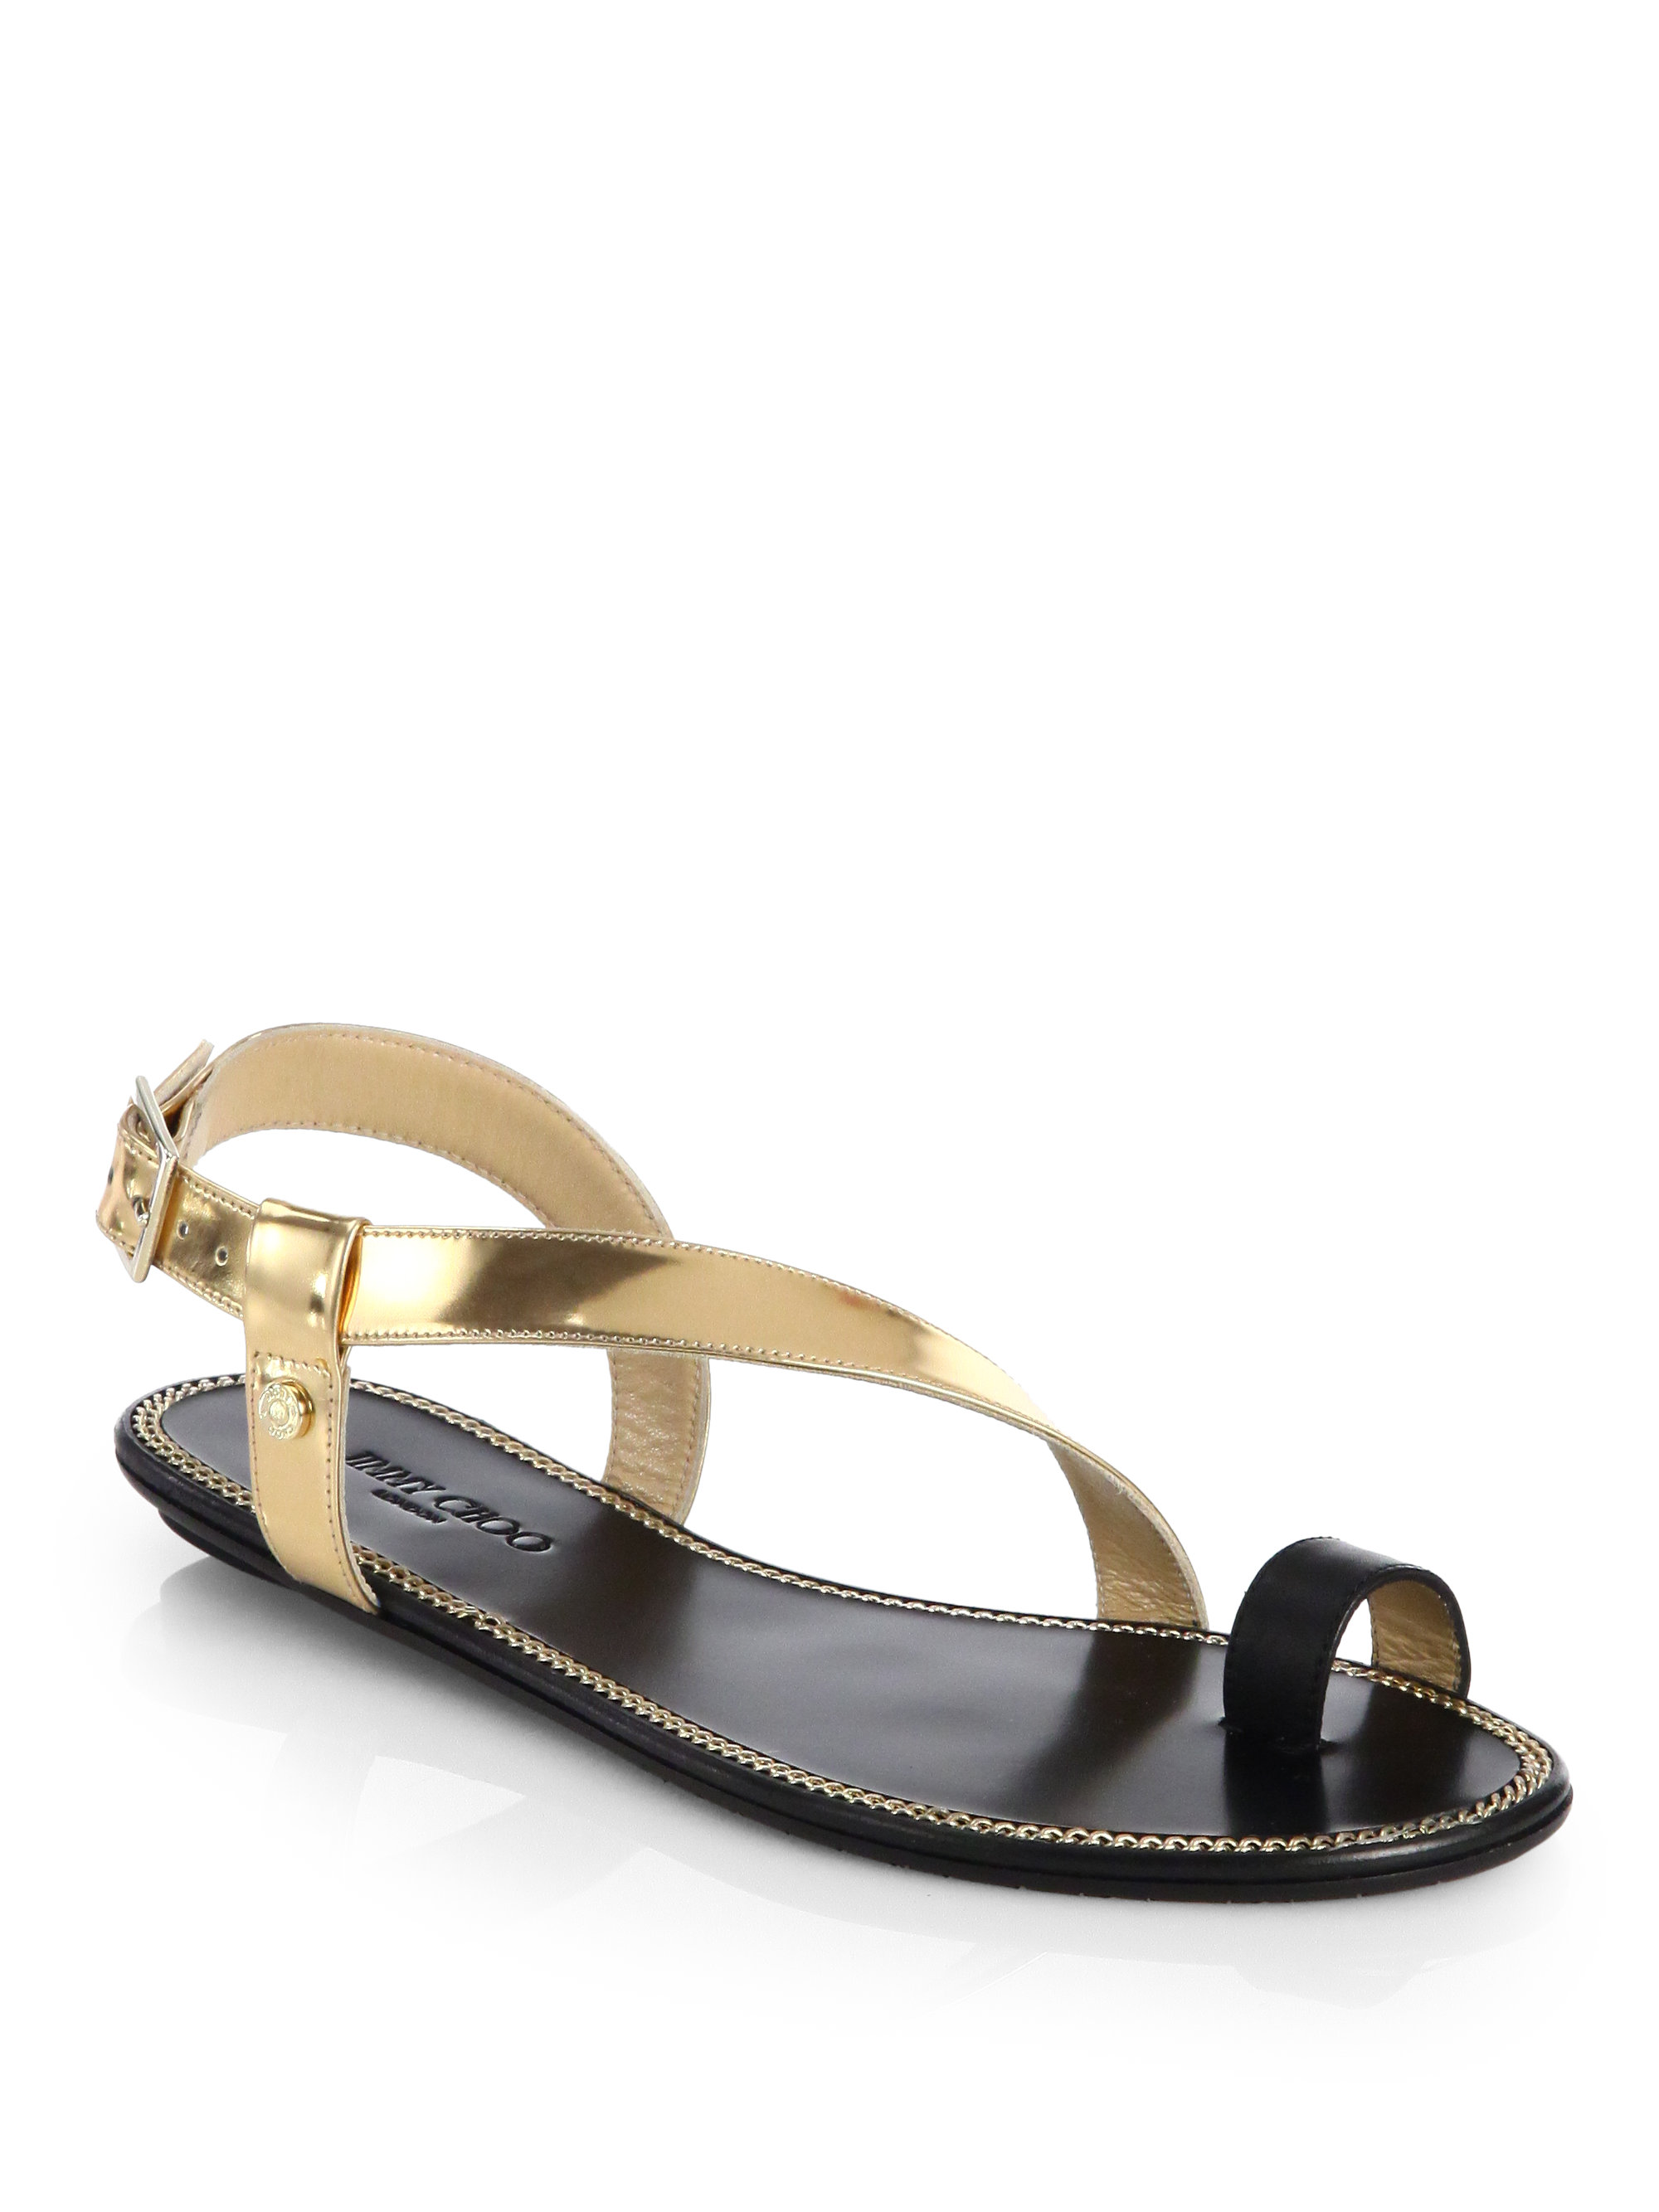 Jimmy Choo Neru Mirror Leather Toe Ring Sandals in Black Gold 